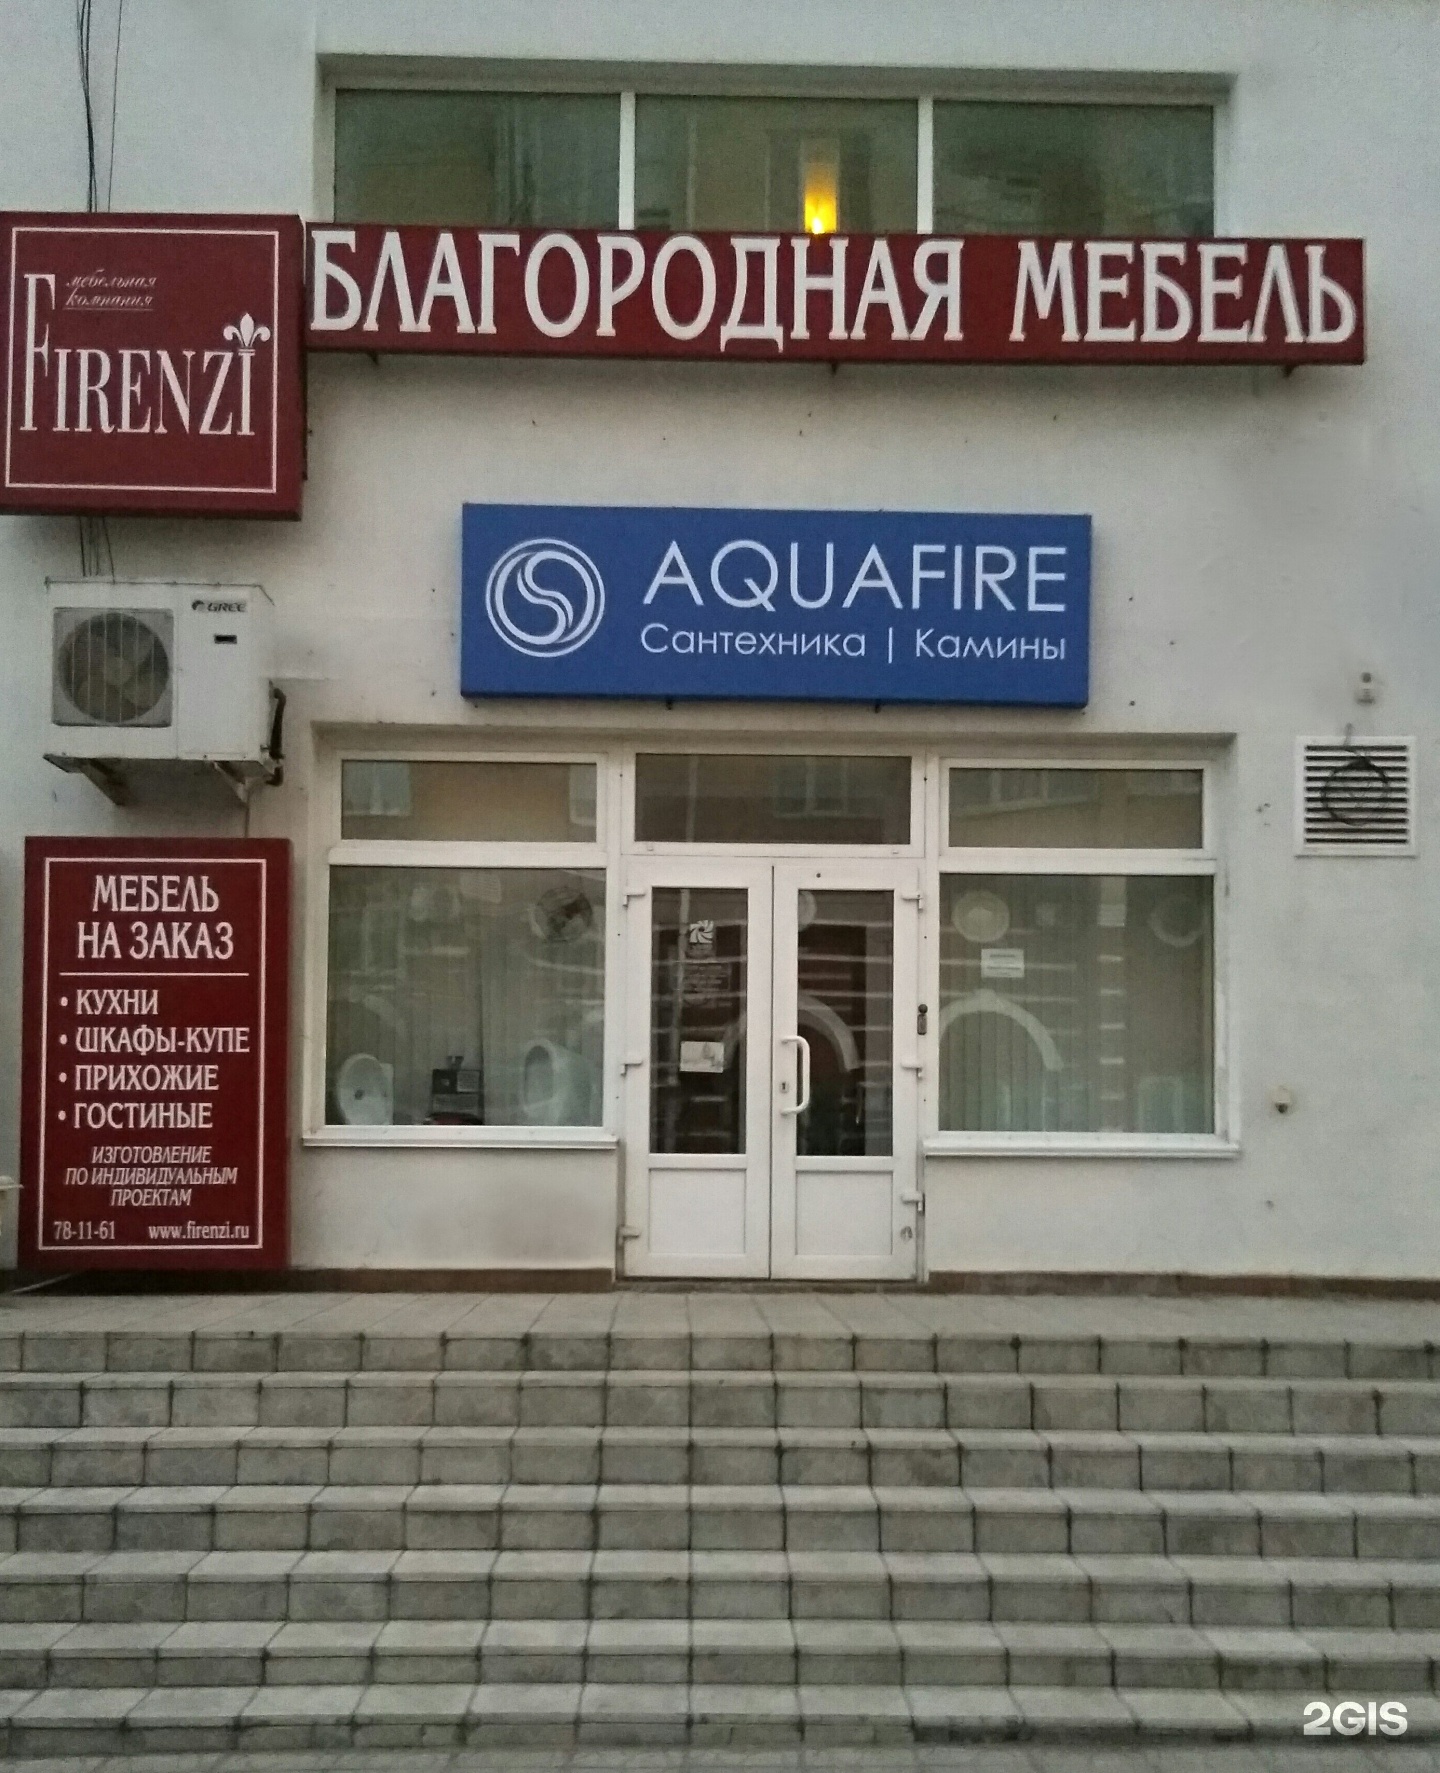 Aquafire salon